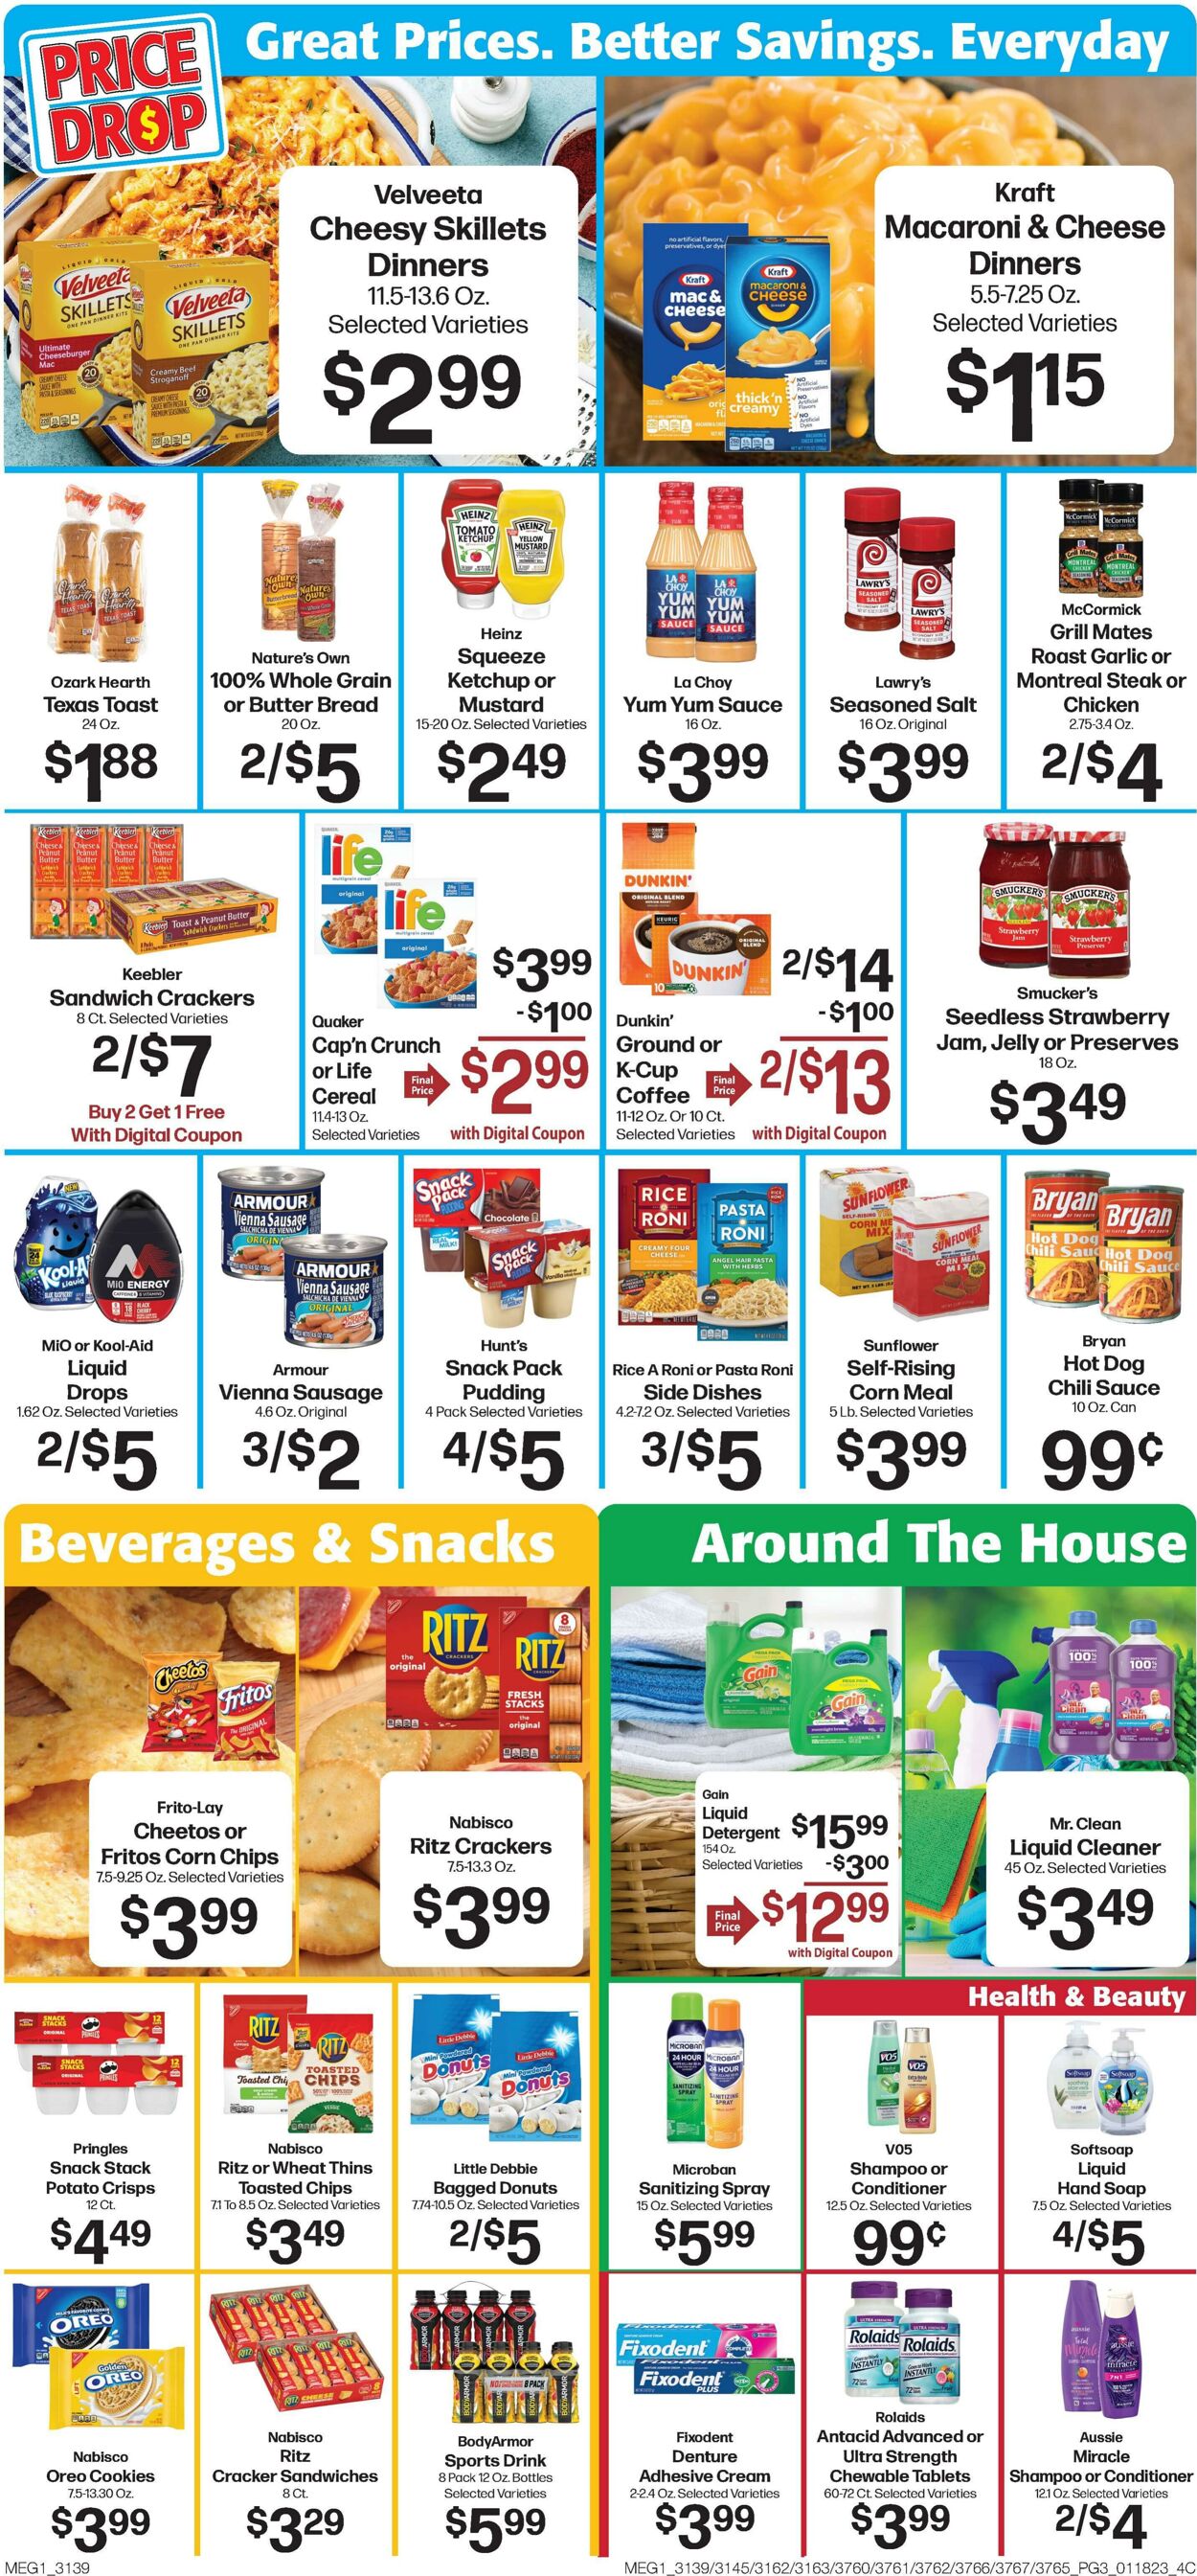 Weekly ad Hays Supermarkets 01/18/2023 - 01/24/2023